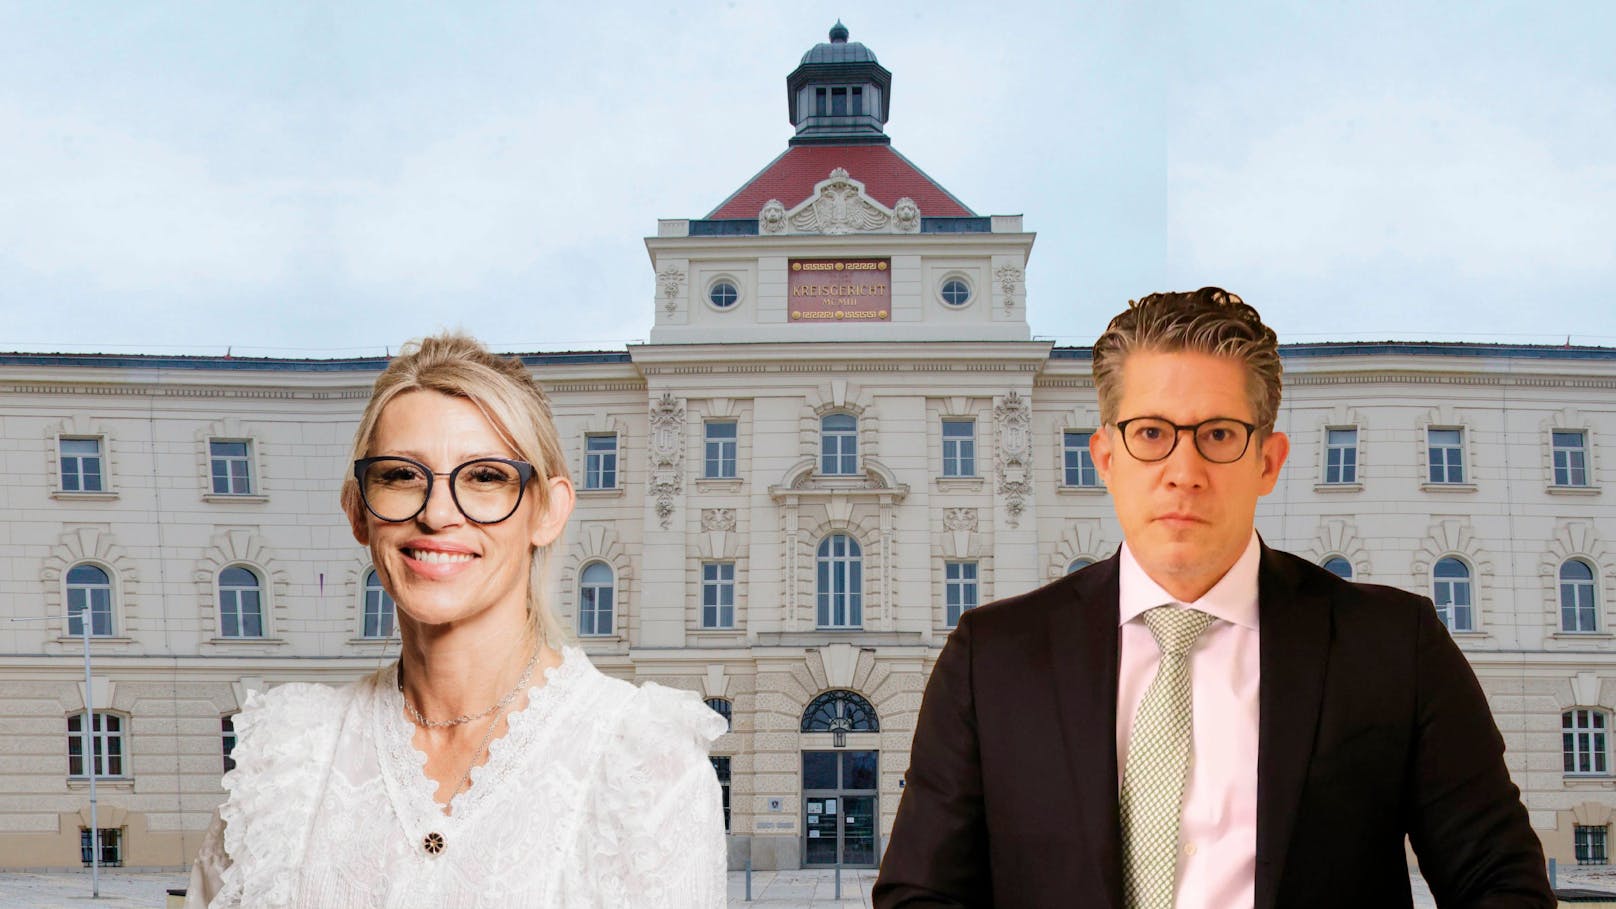 Anwalt Florian Höllwarth und Psychologin Karin Rossneger "boxten" den Psychologen (45) raus.